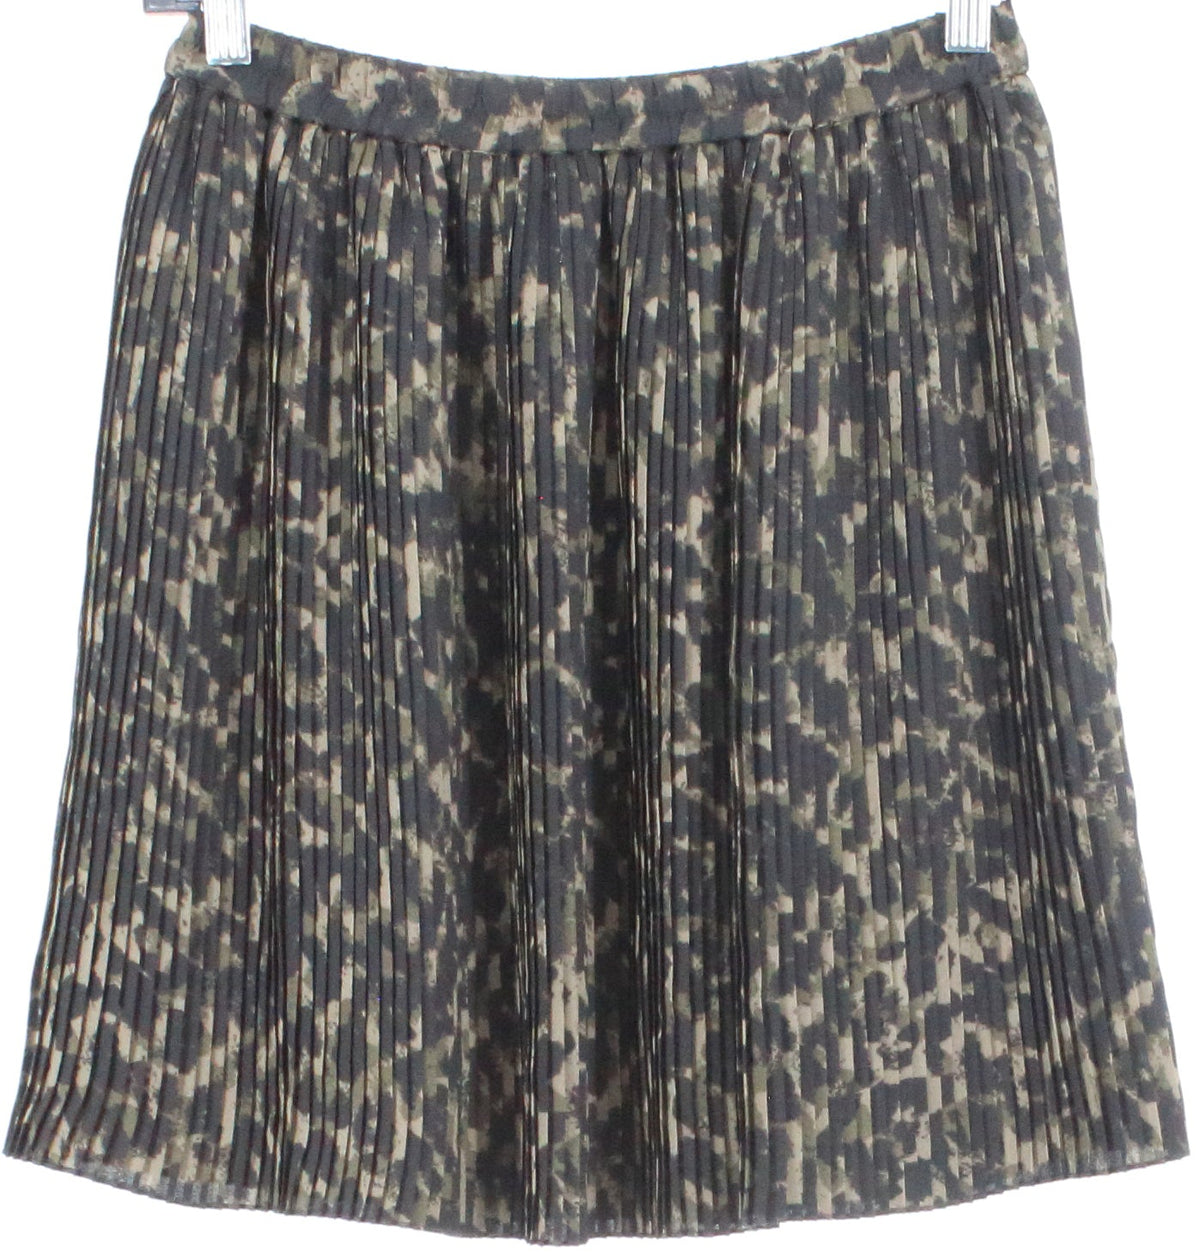 H&M Black and Beige Print Pleated Skirt